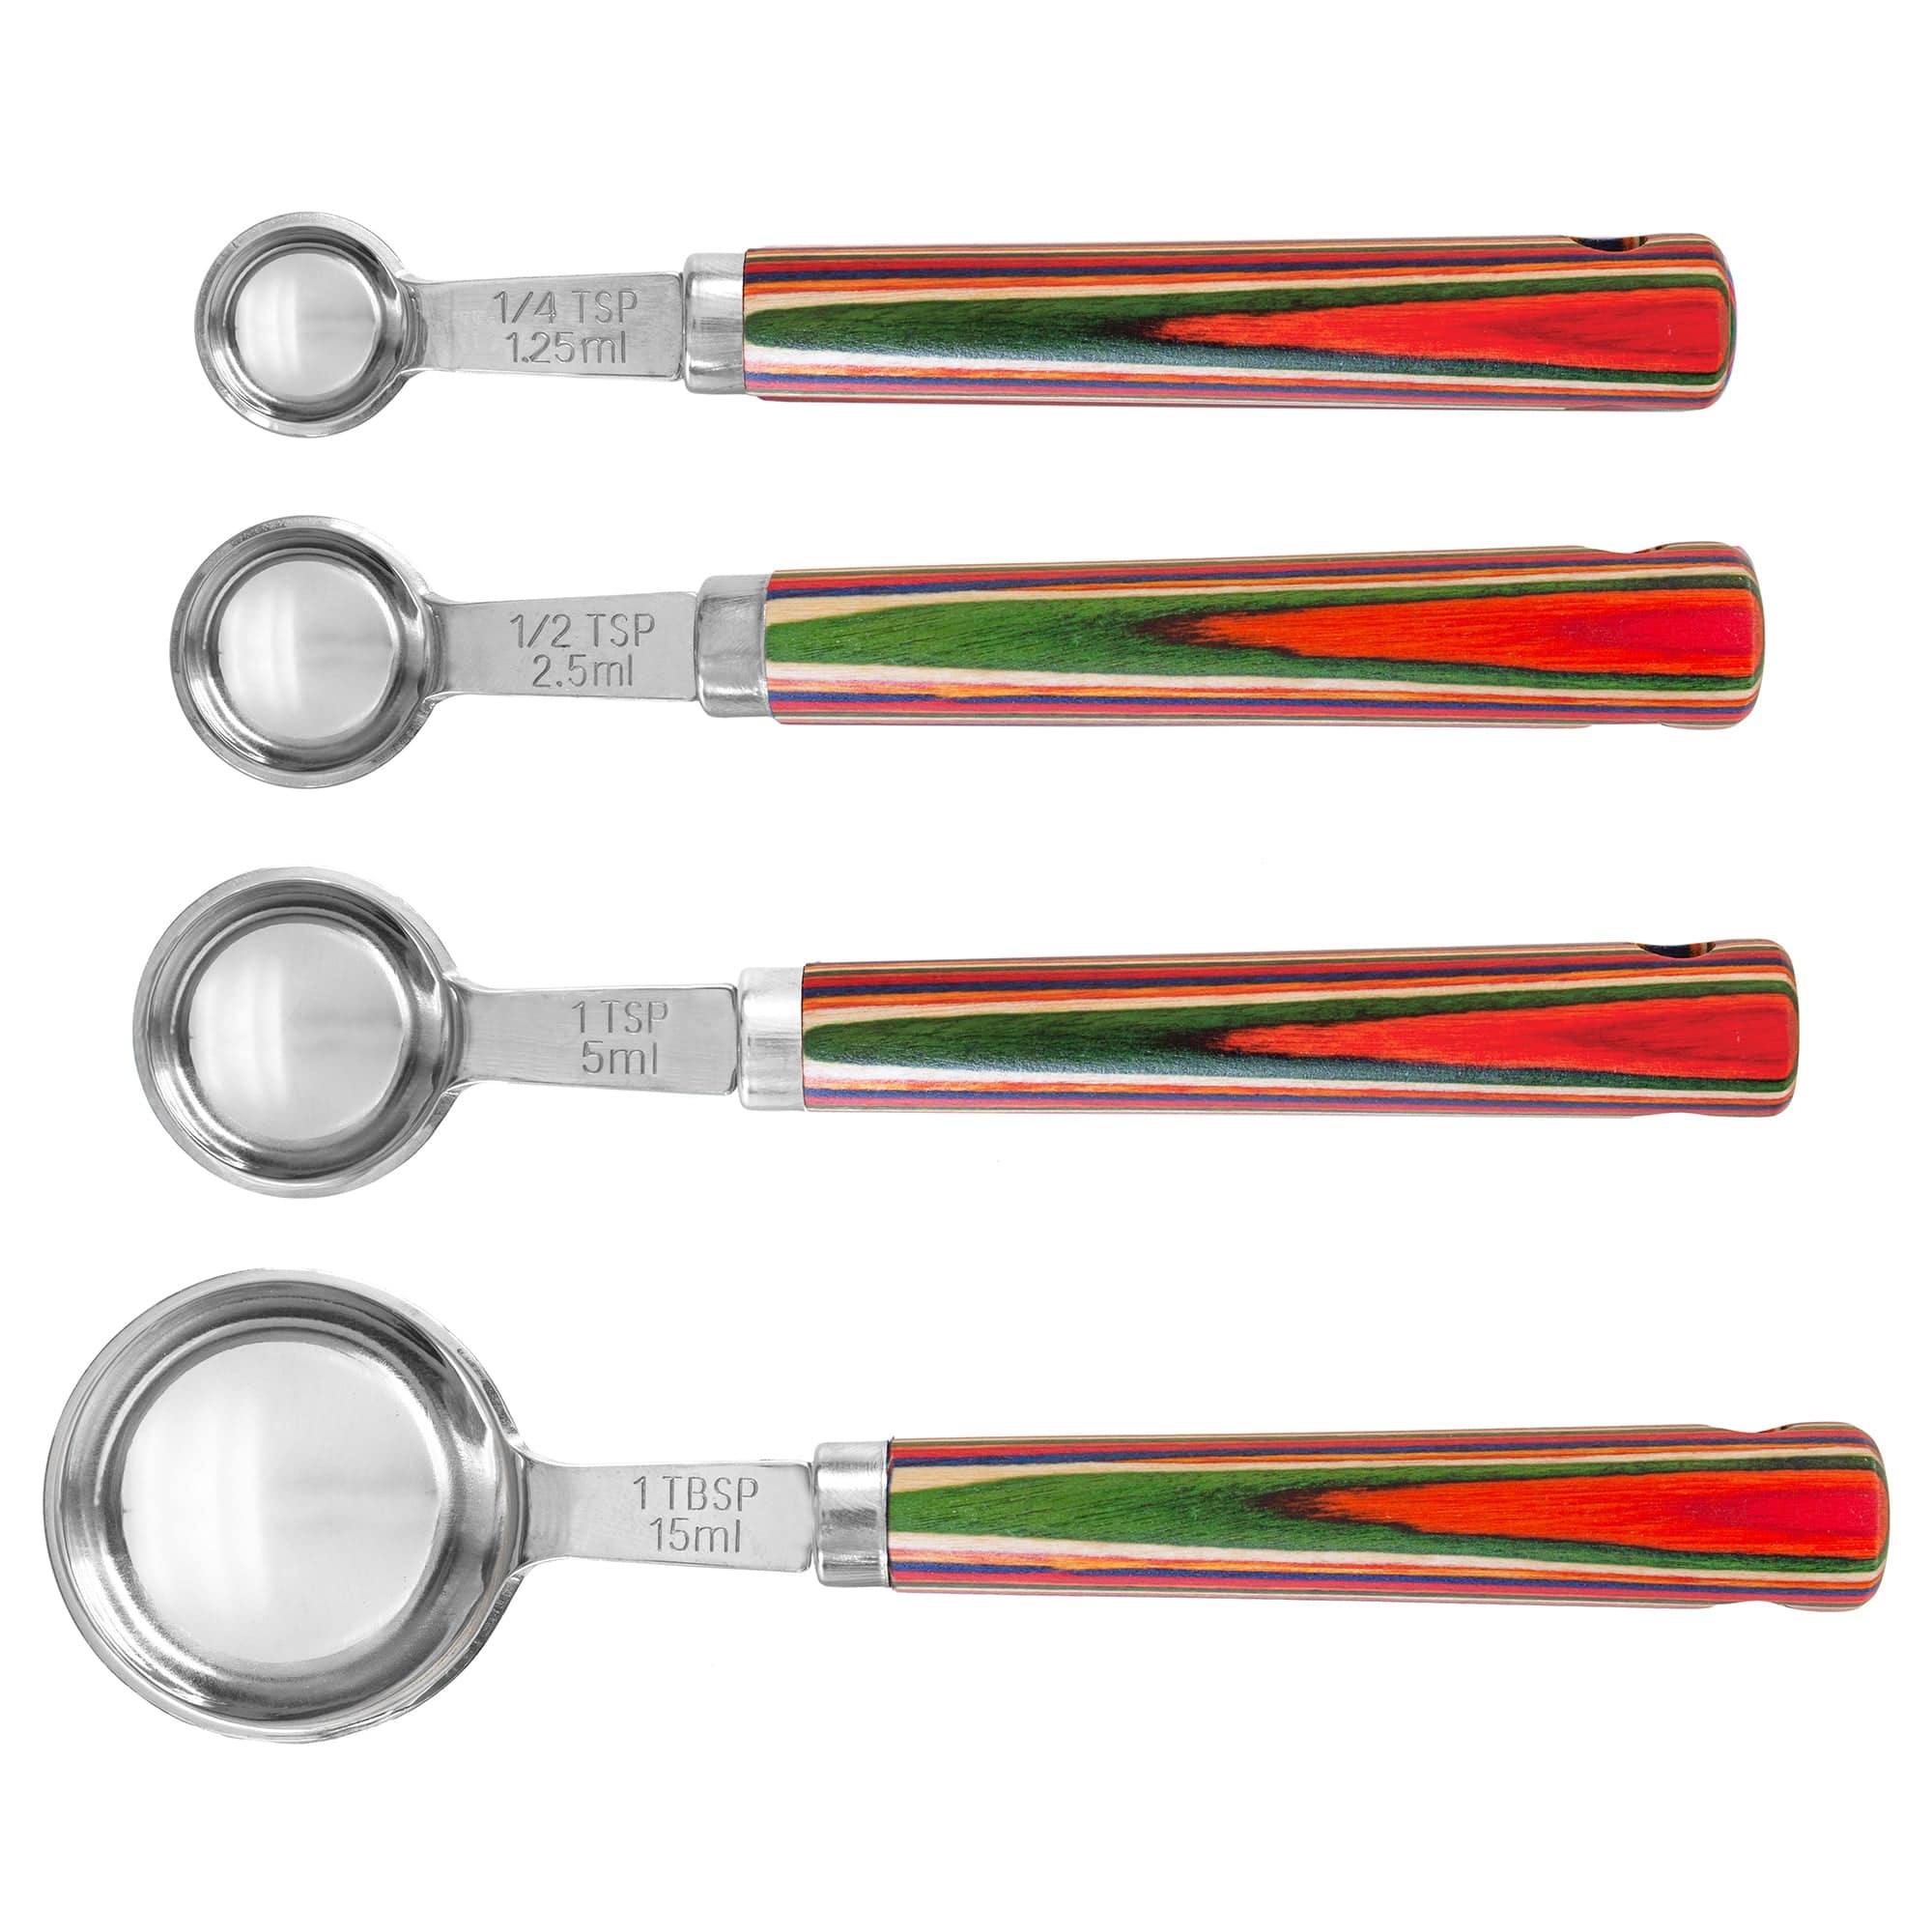 Stainless Steel Measuring Spoons Tablespoon Measuring Spoon Set